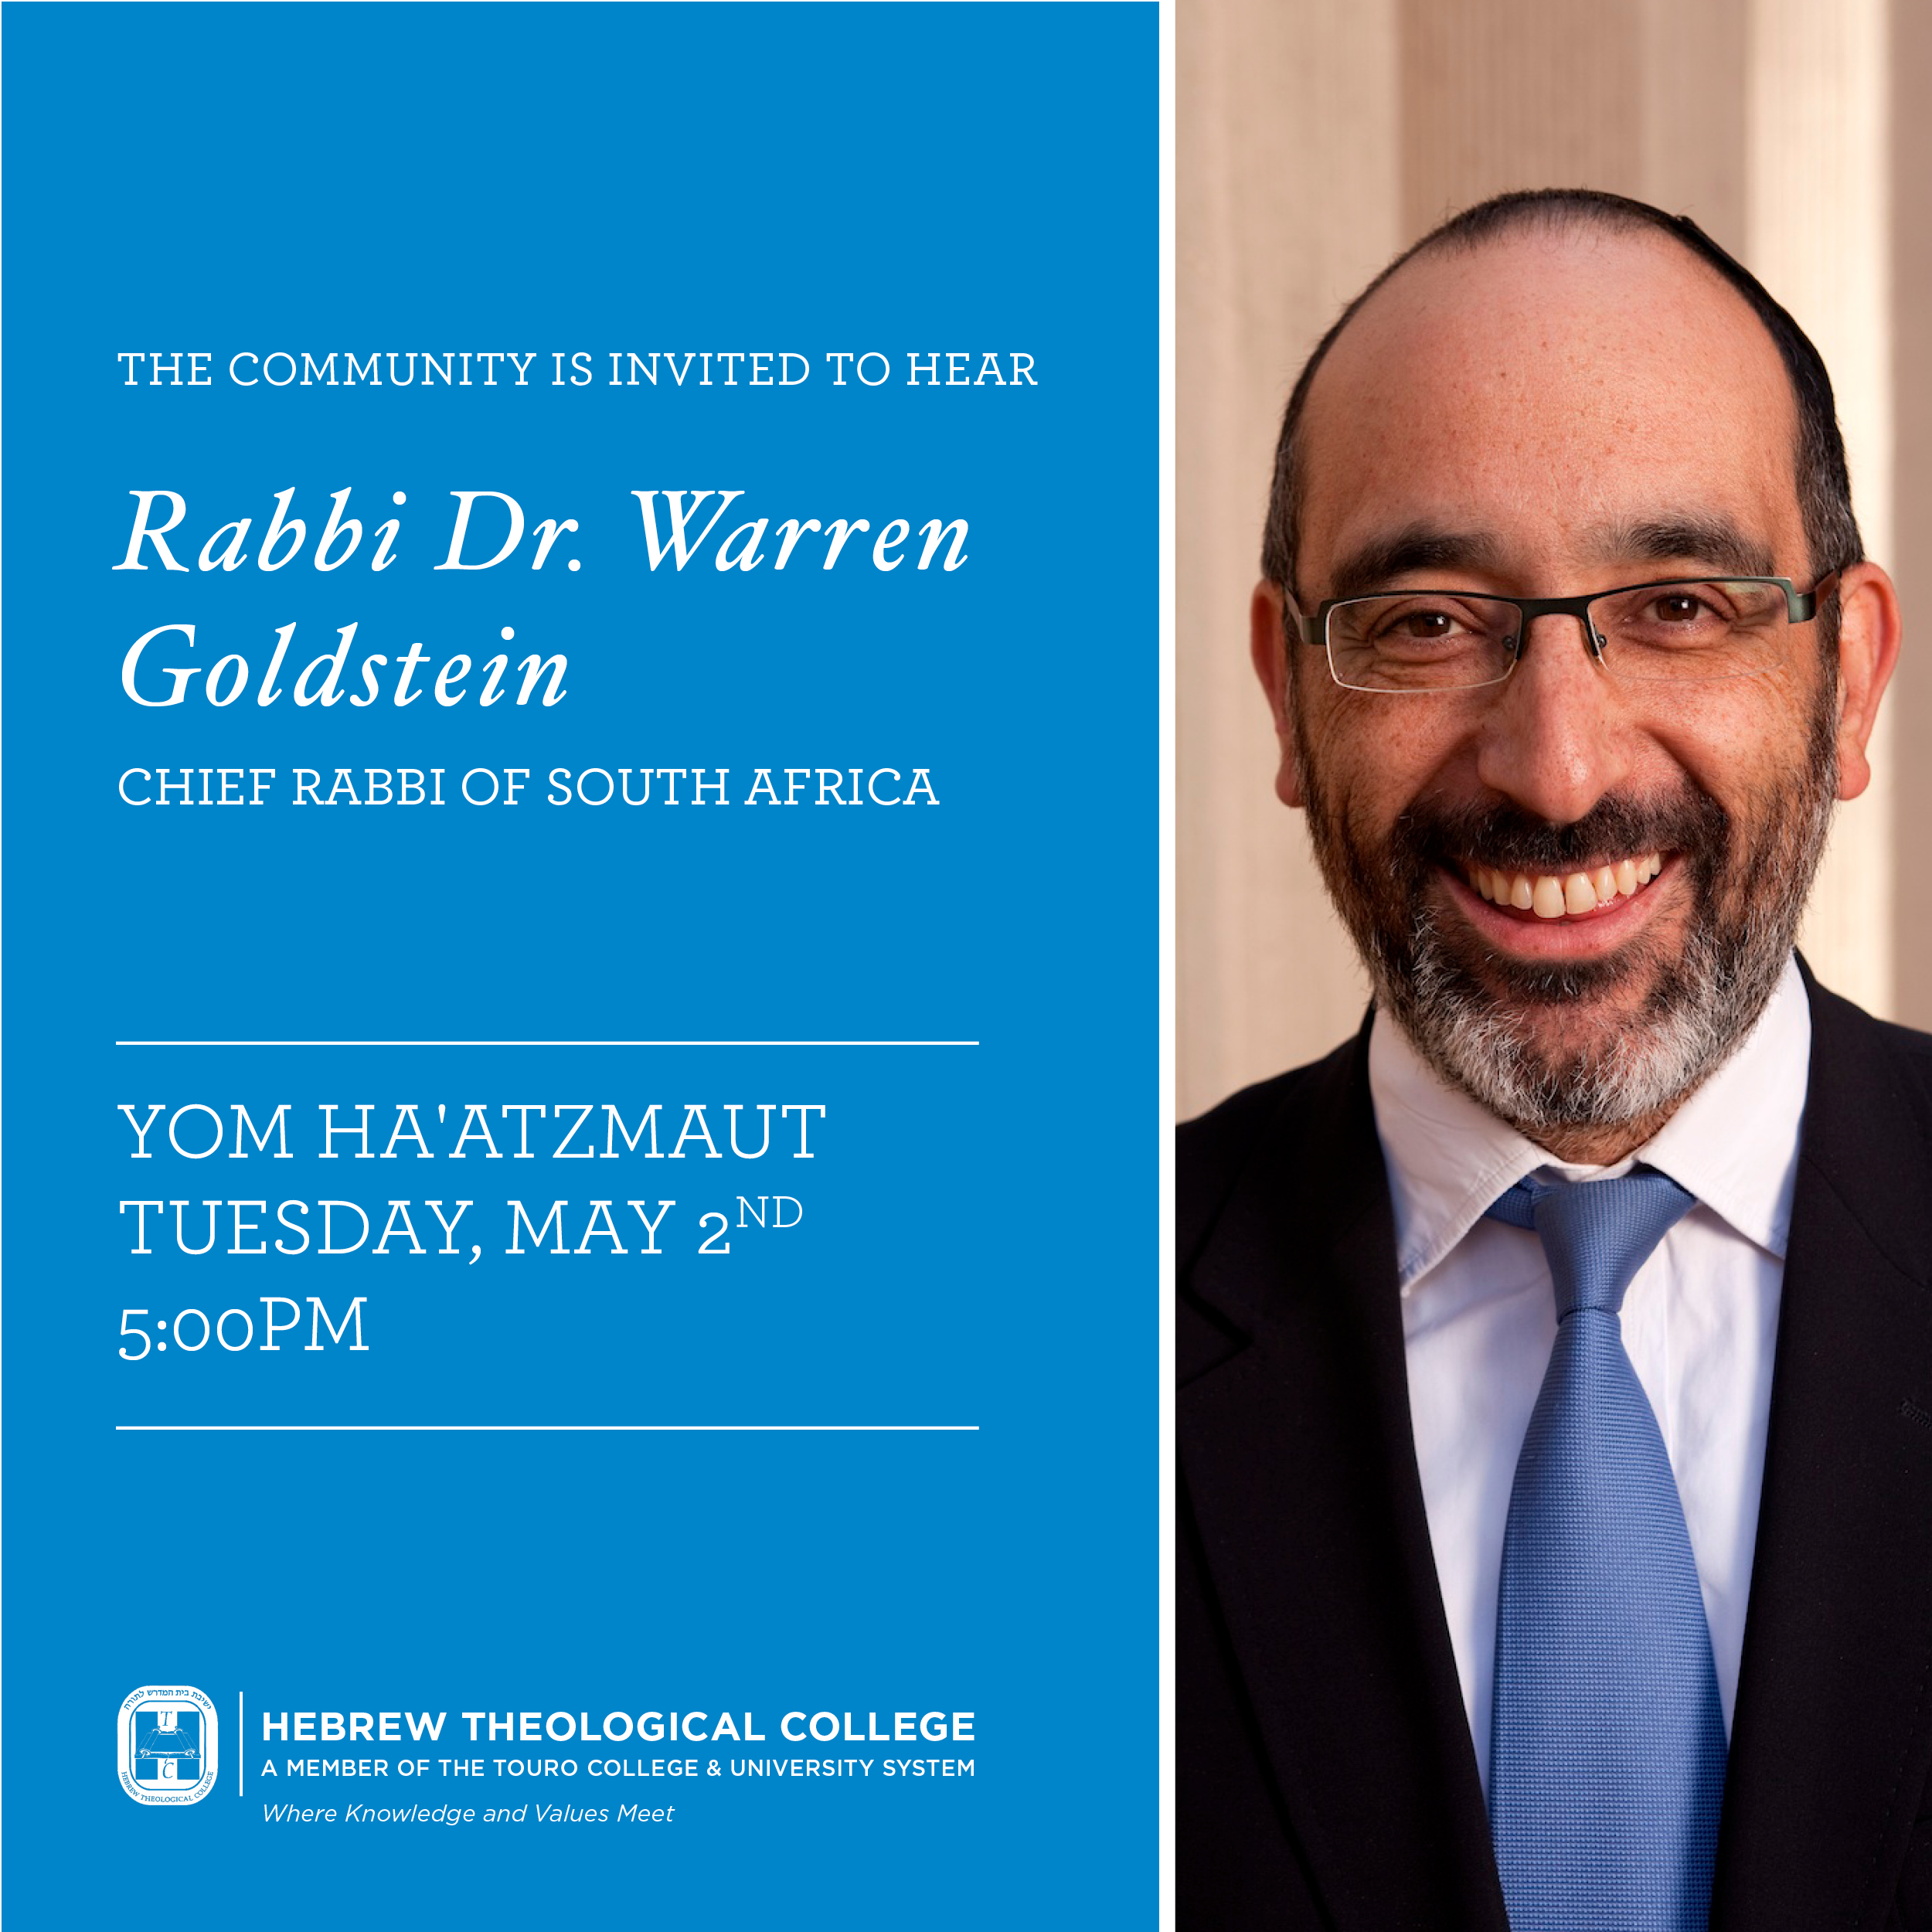 HTC invites the Chicago community to hear the Chief Rabbi of South Africa, Rabbi Dr. Warren Goldstein, speak at their Yom Ha'atzmaut event